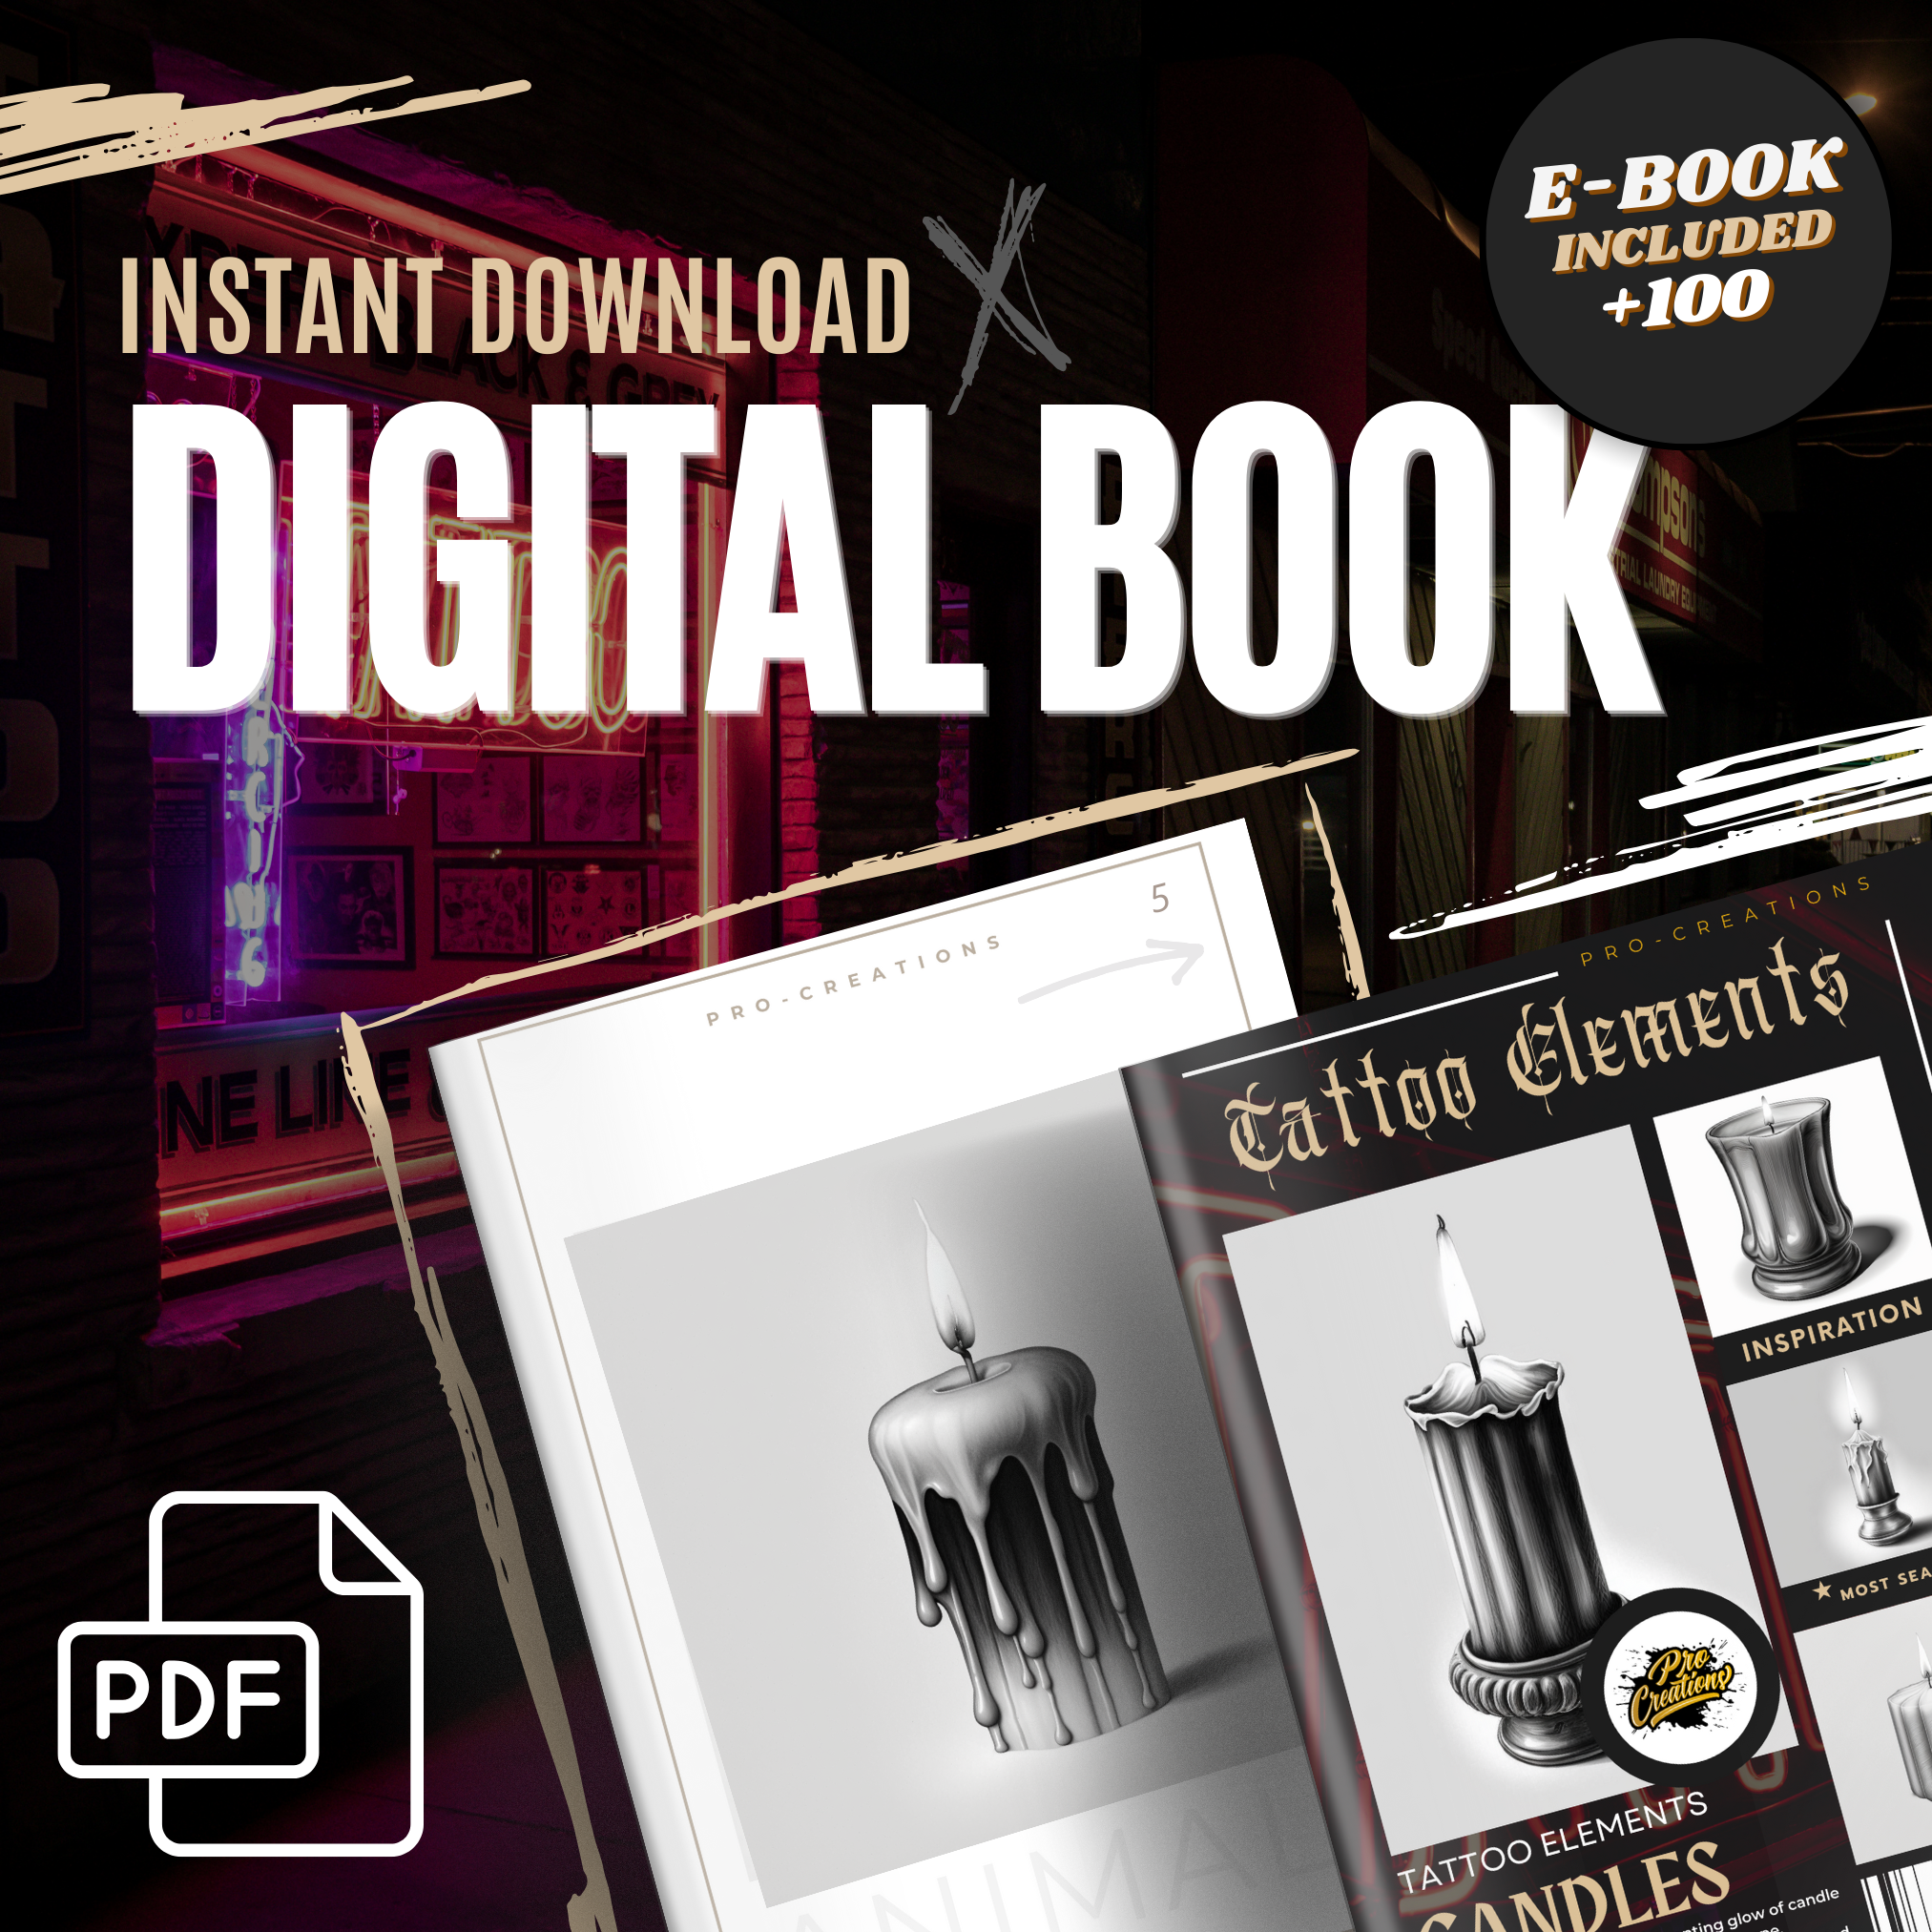 Candles Digital Tattoo Element Design Collection: 100 Procreate & Sketchbook Images